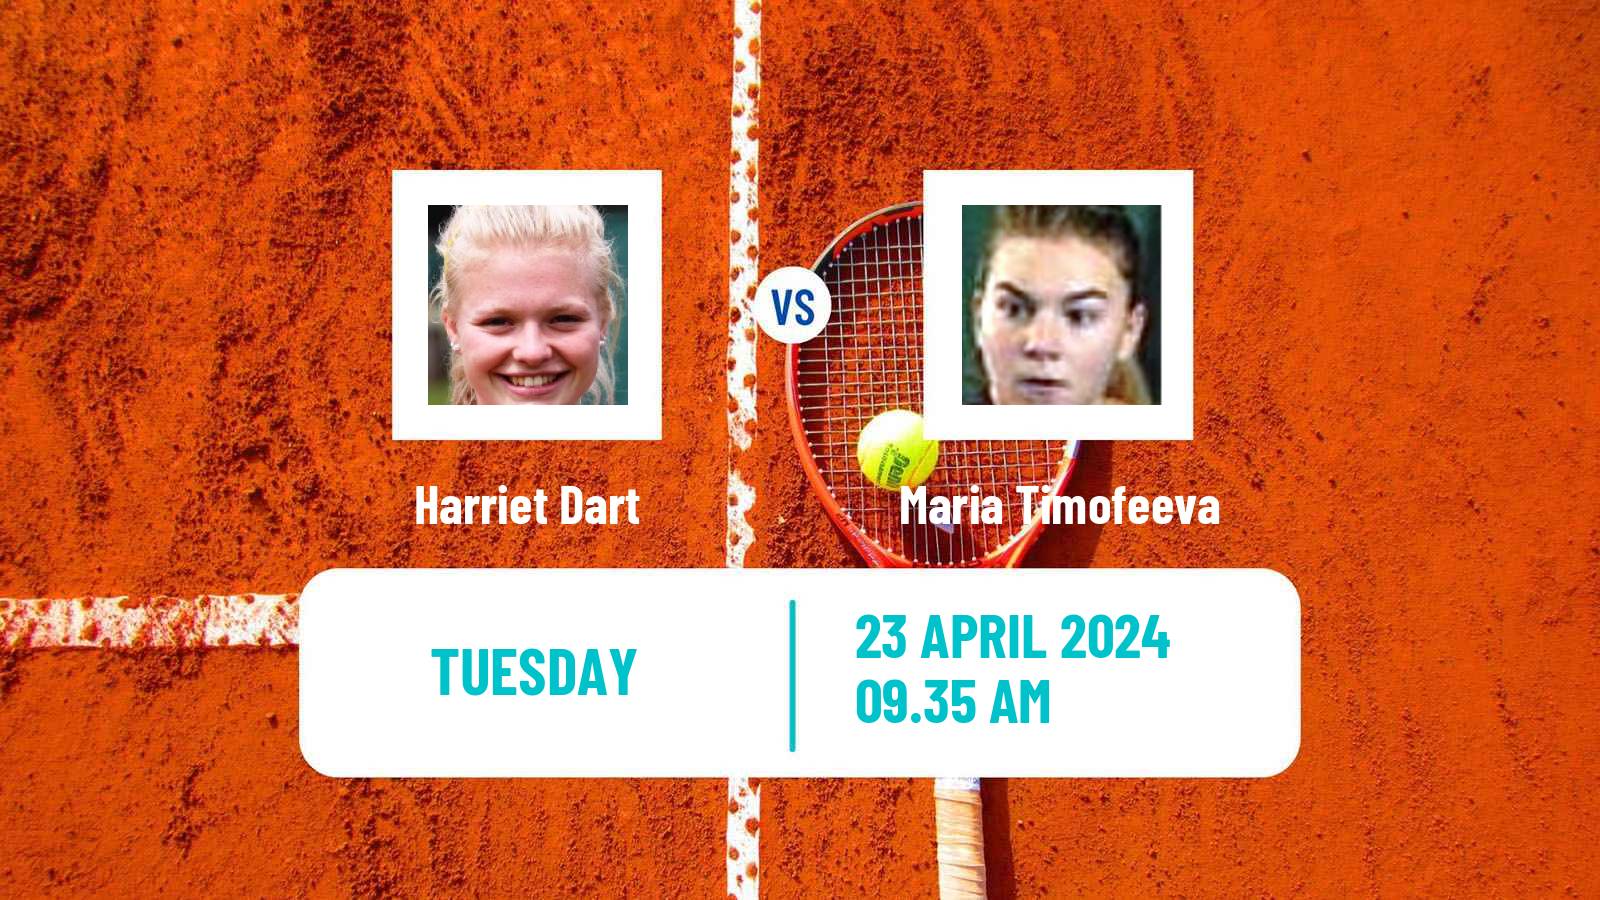 Tennis WTA Madrid Harriet Dart - Maria Timofeeva